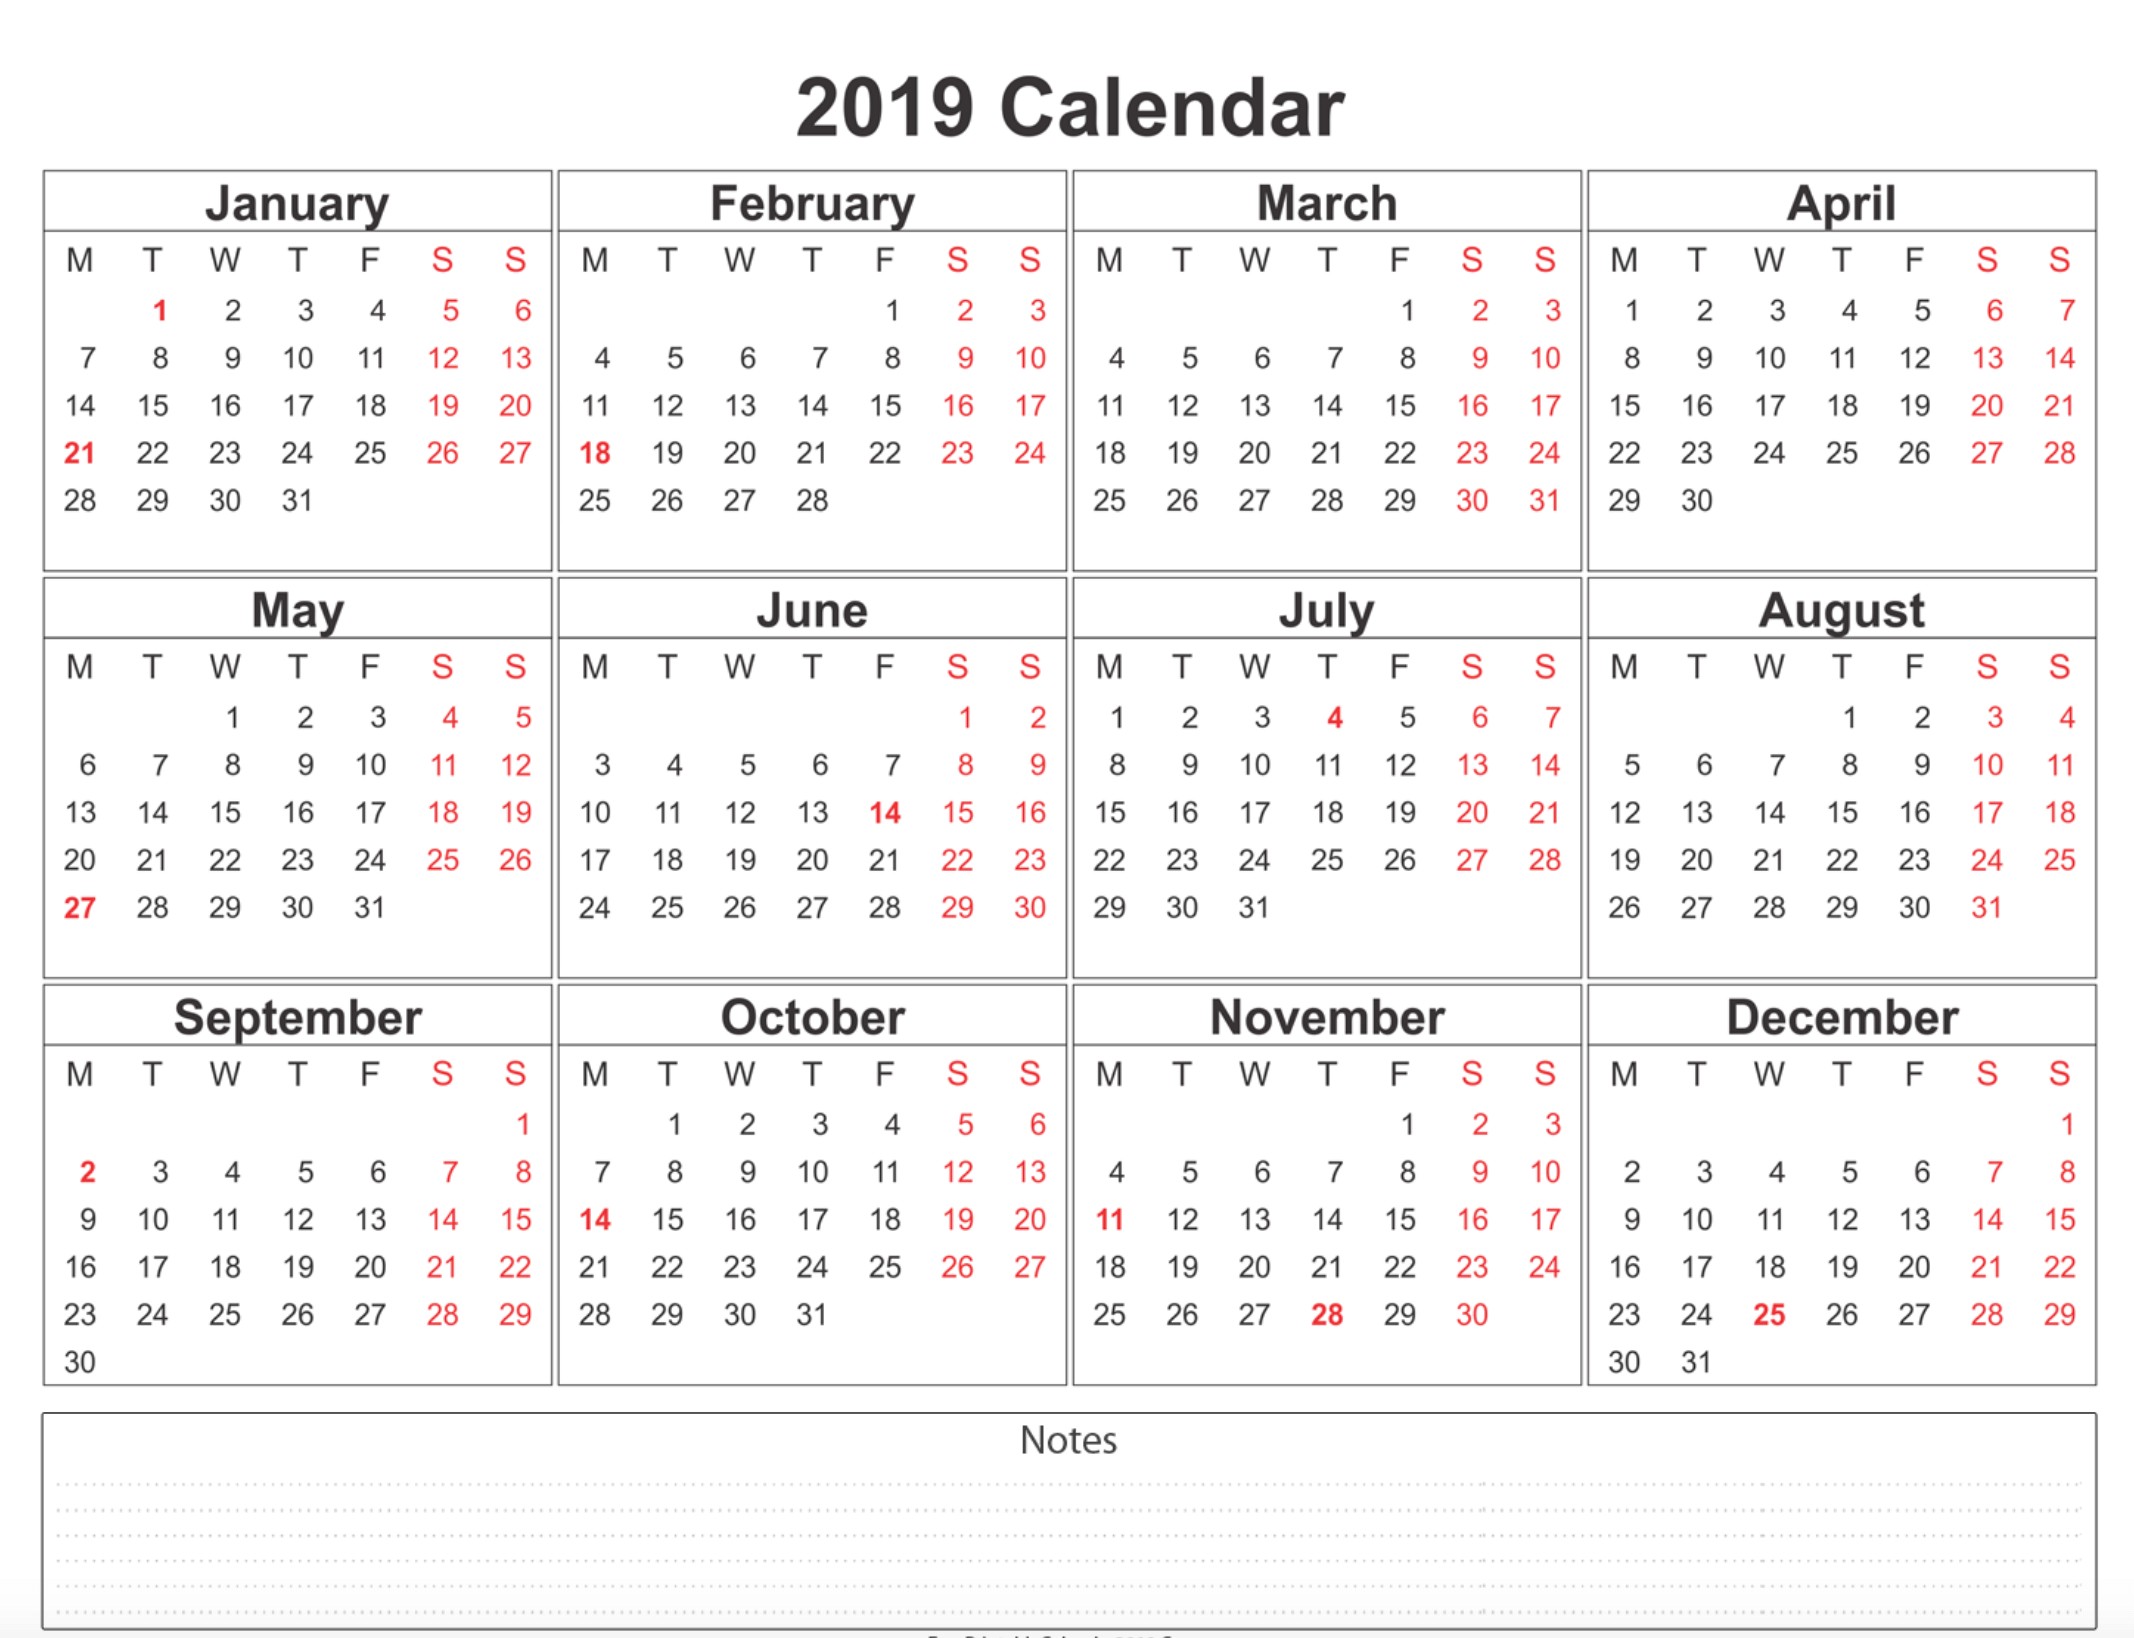 2019 Calendar AmazonAWS